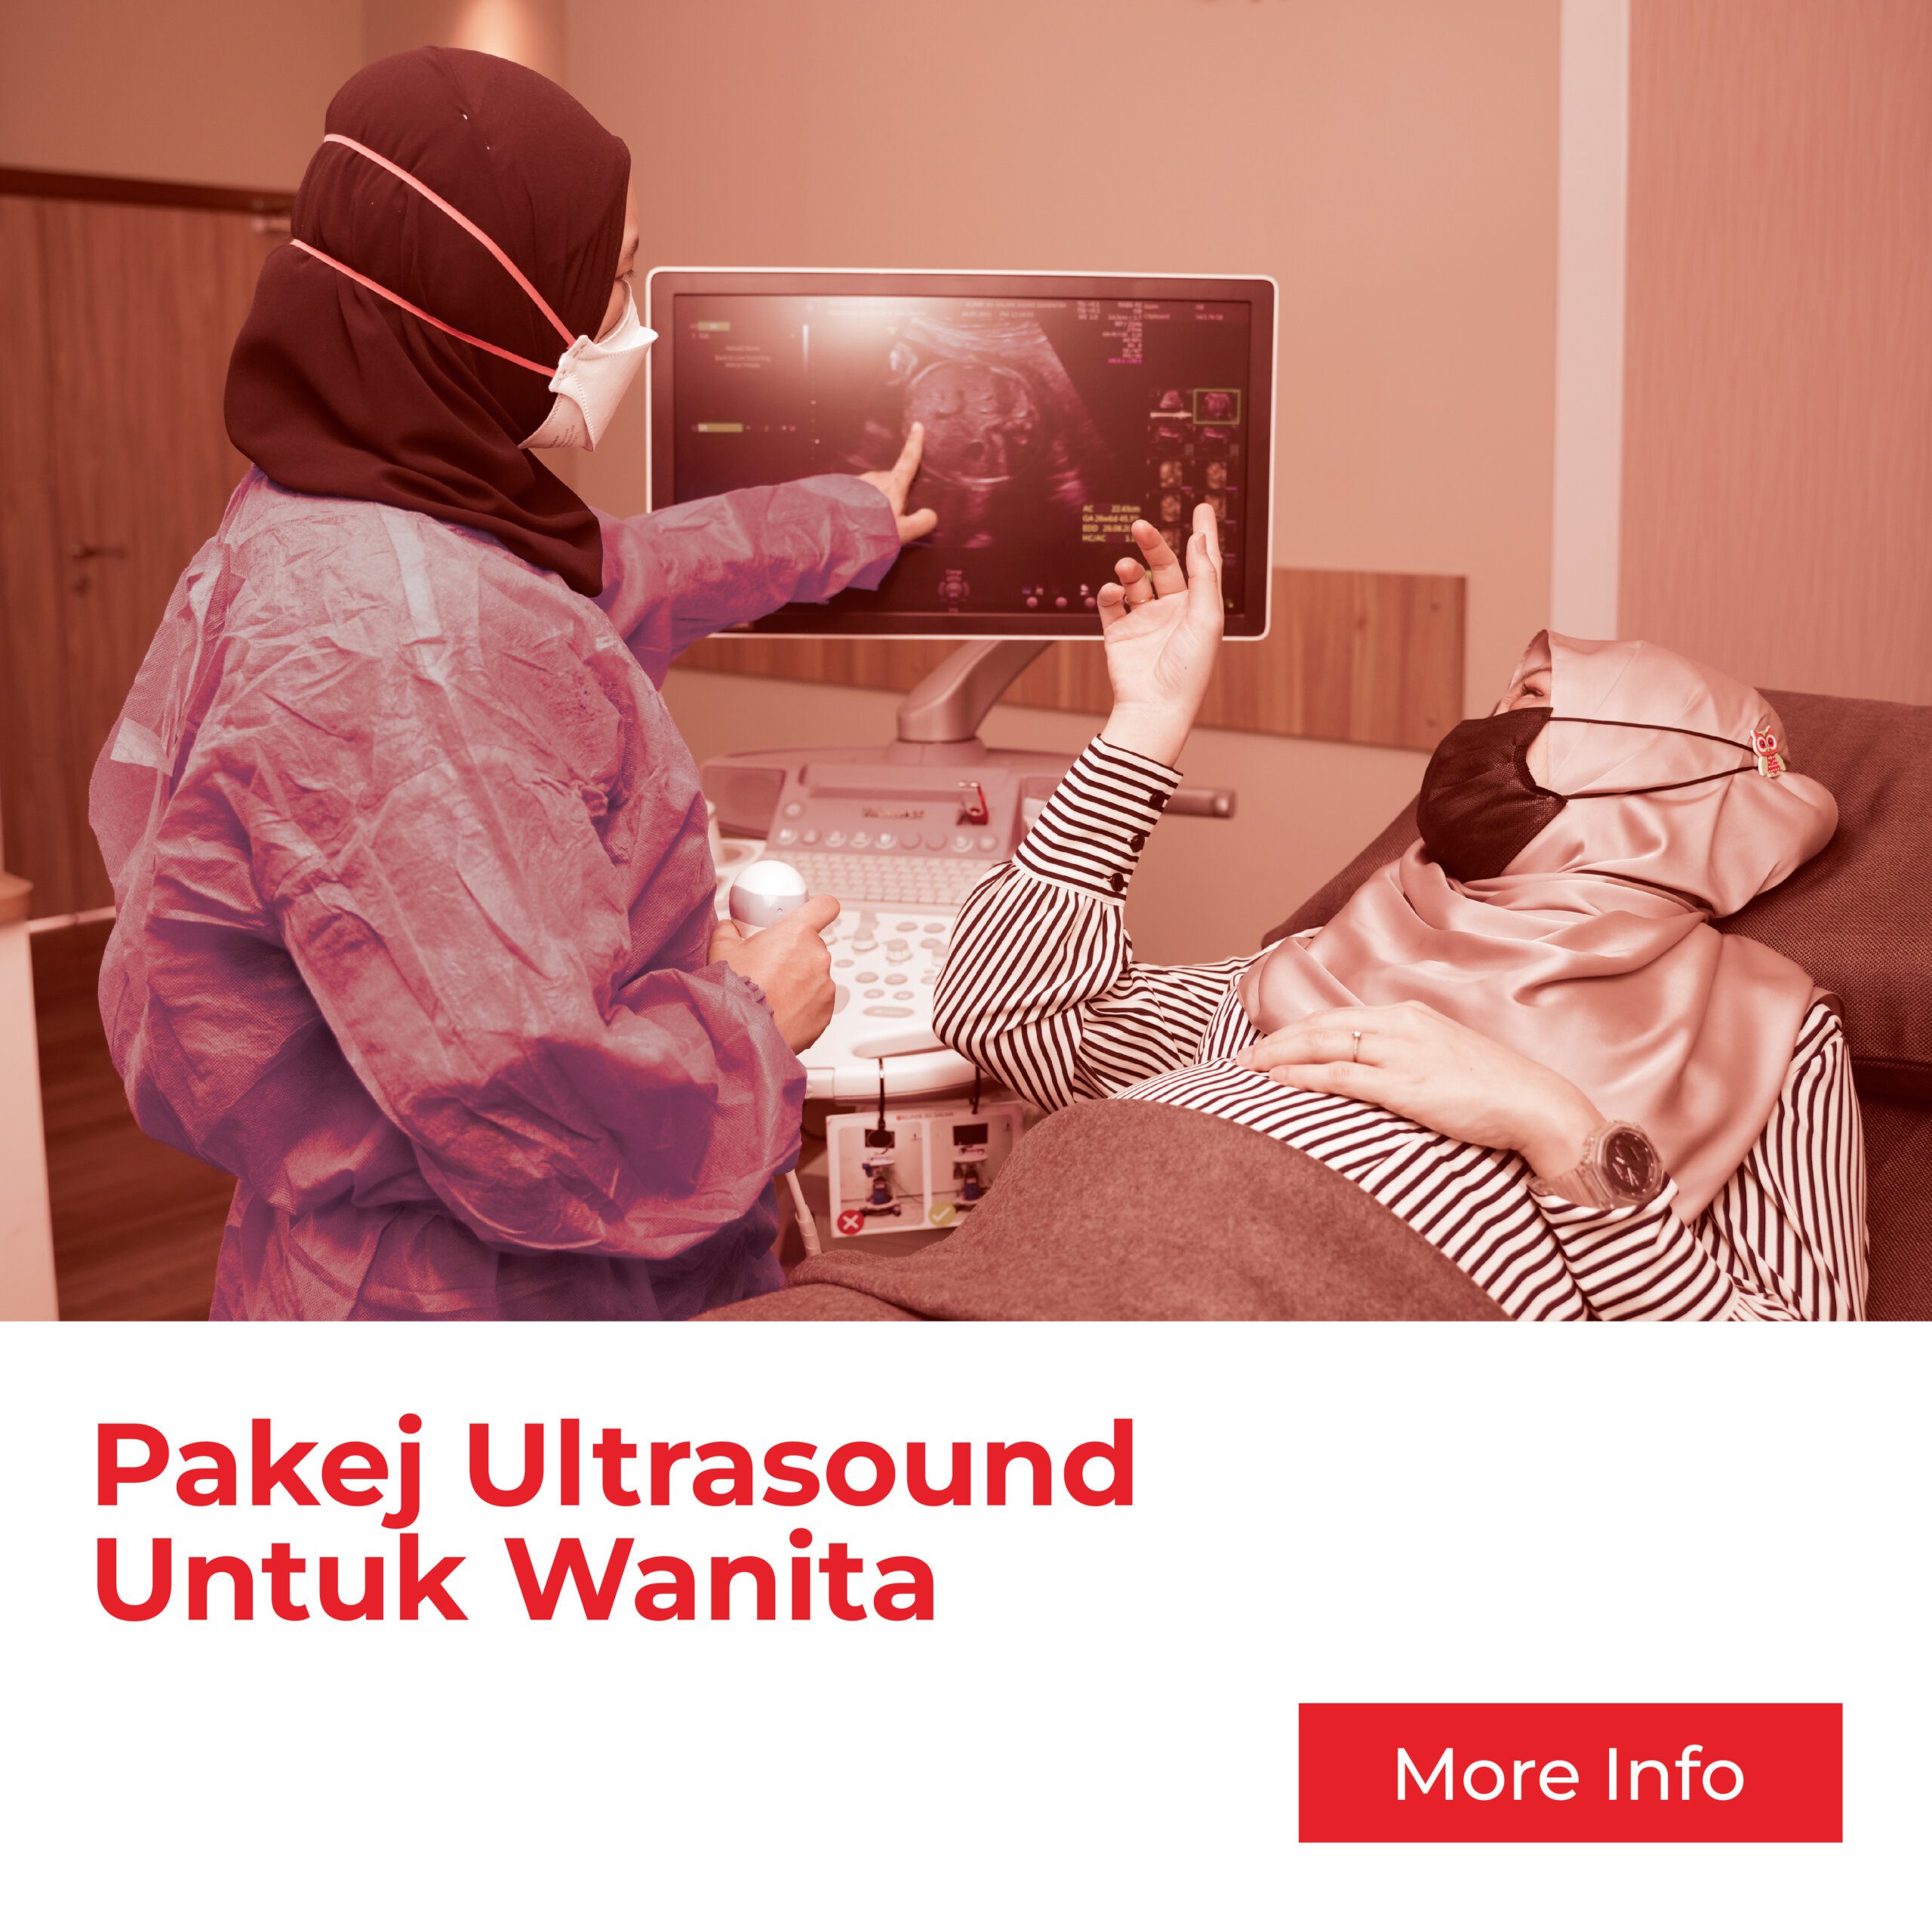 Pakej Ultrasound scan untuk wanita